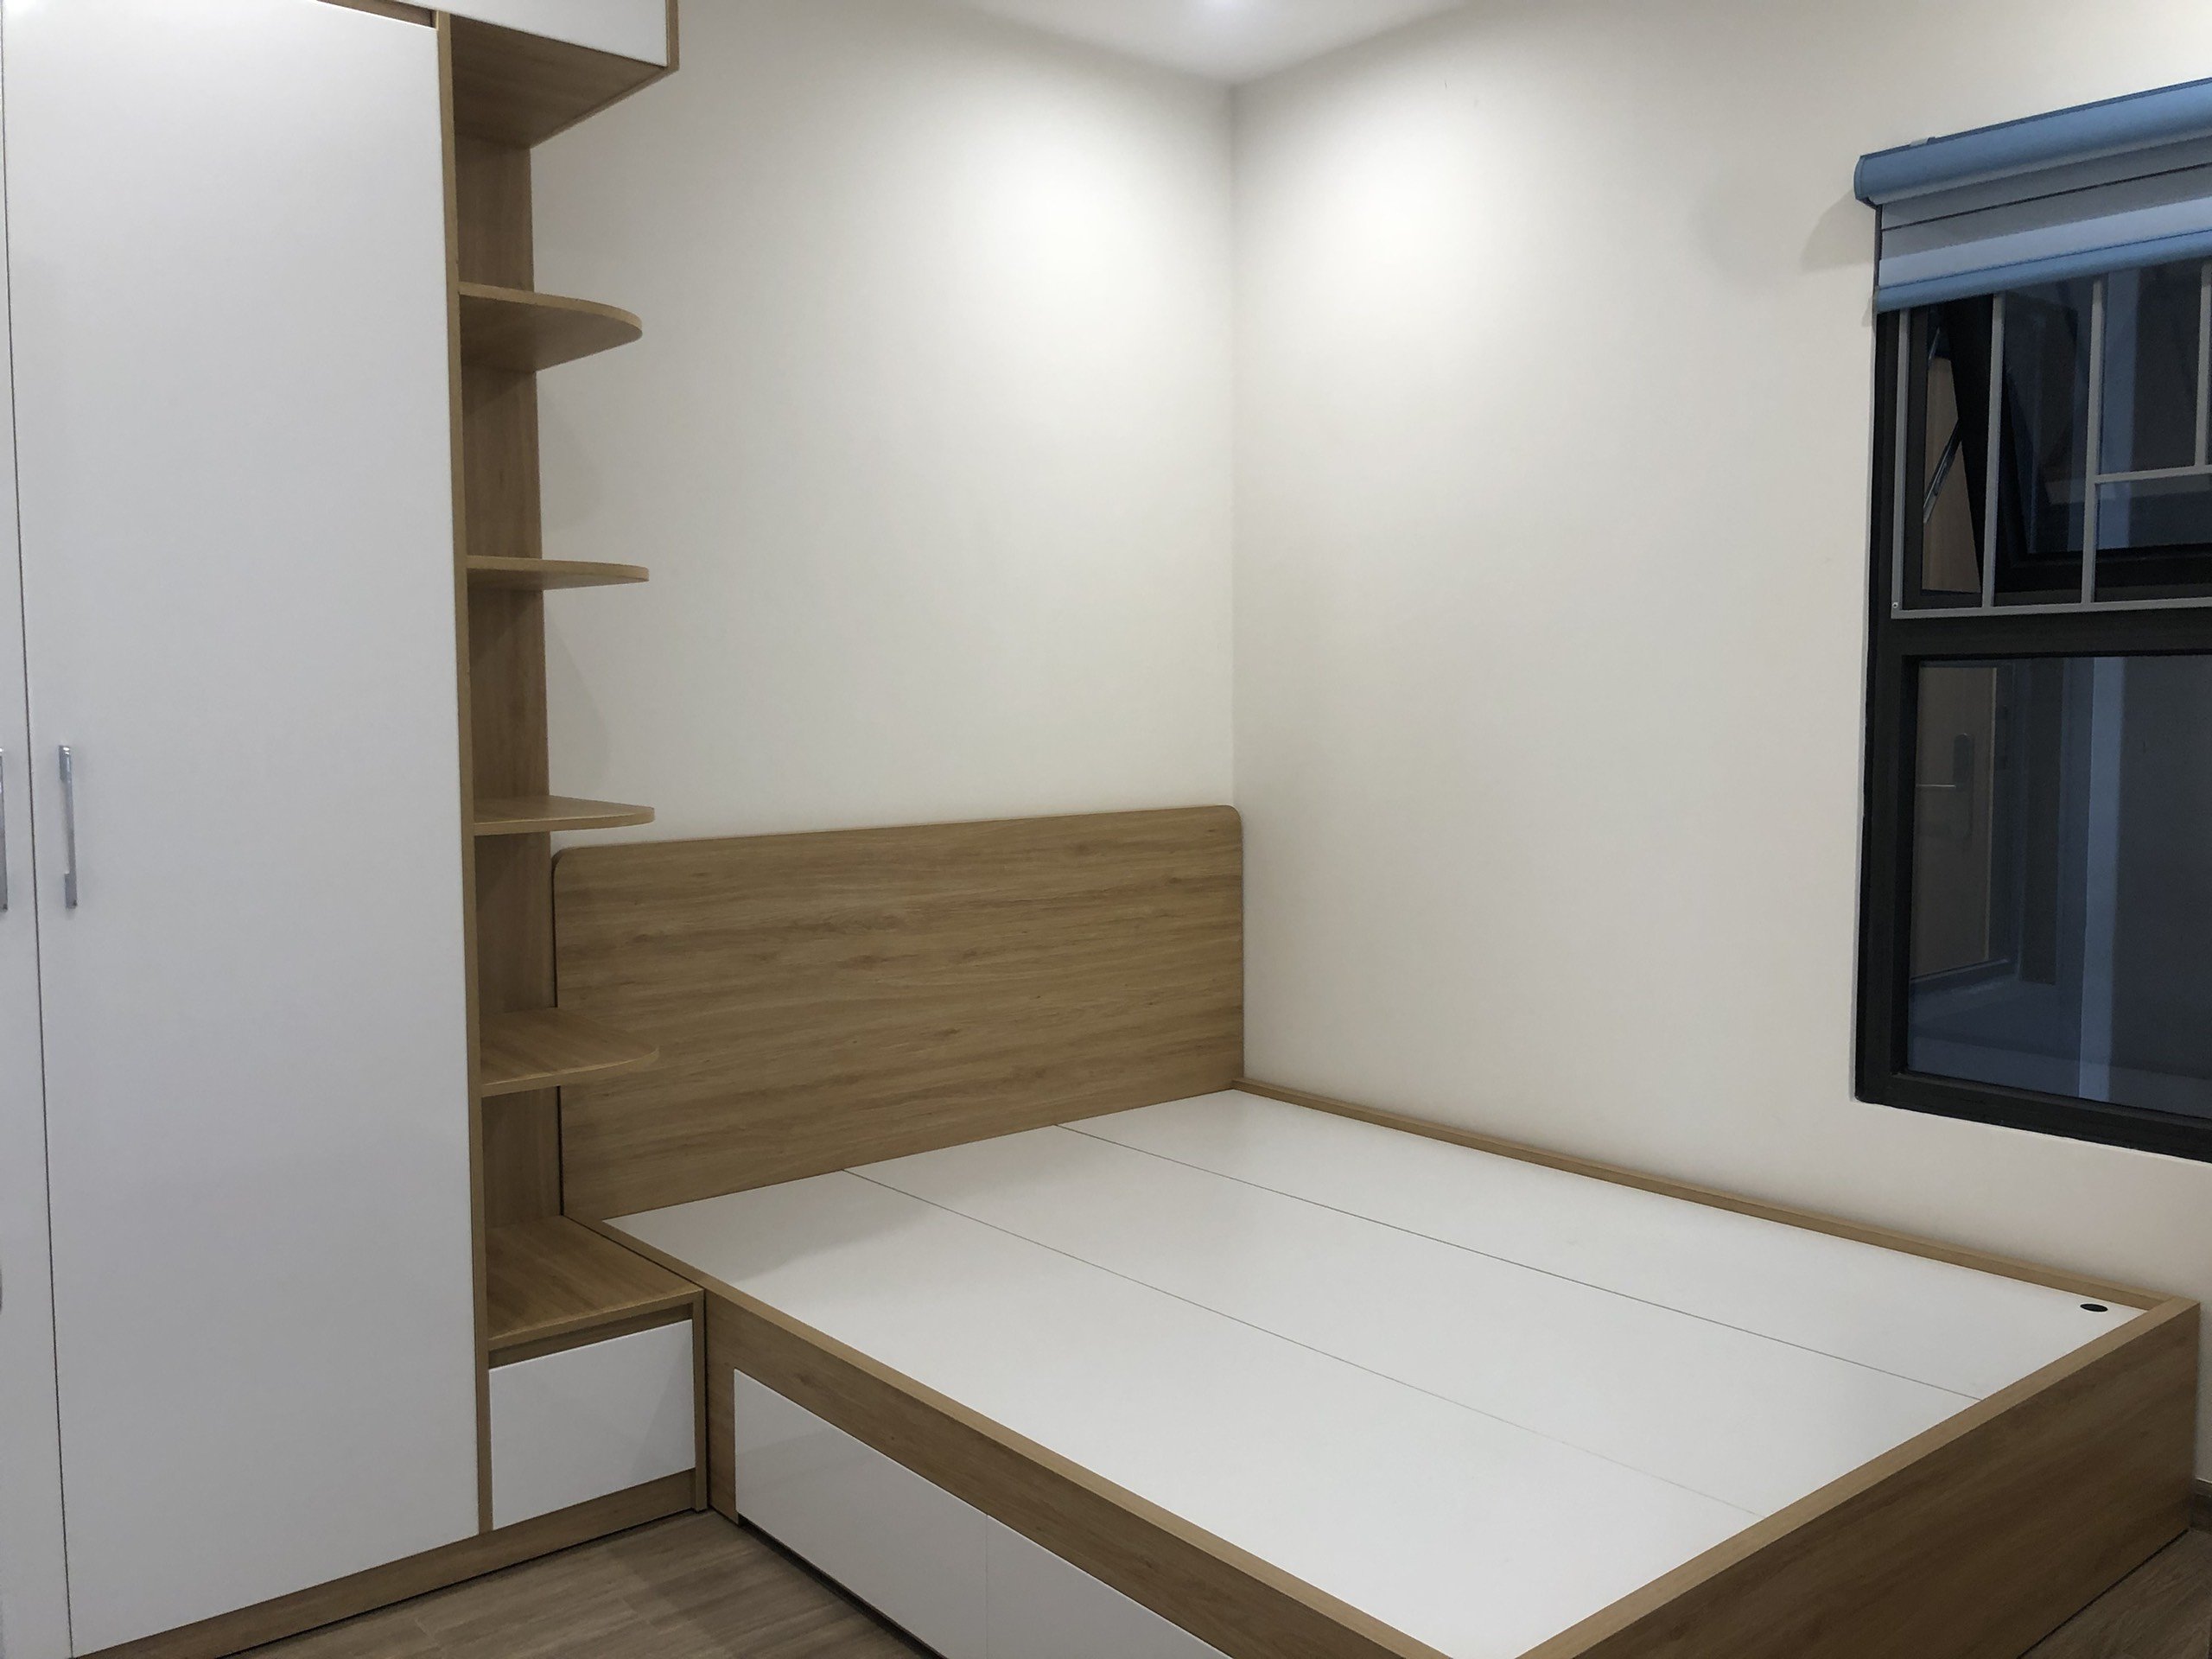 New rental 1 bedroom apartment in Vinhomes Ocean Park S212 for rent 7